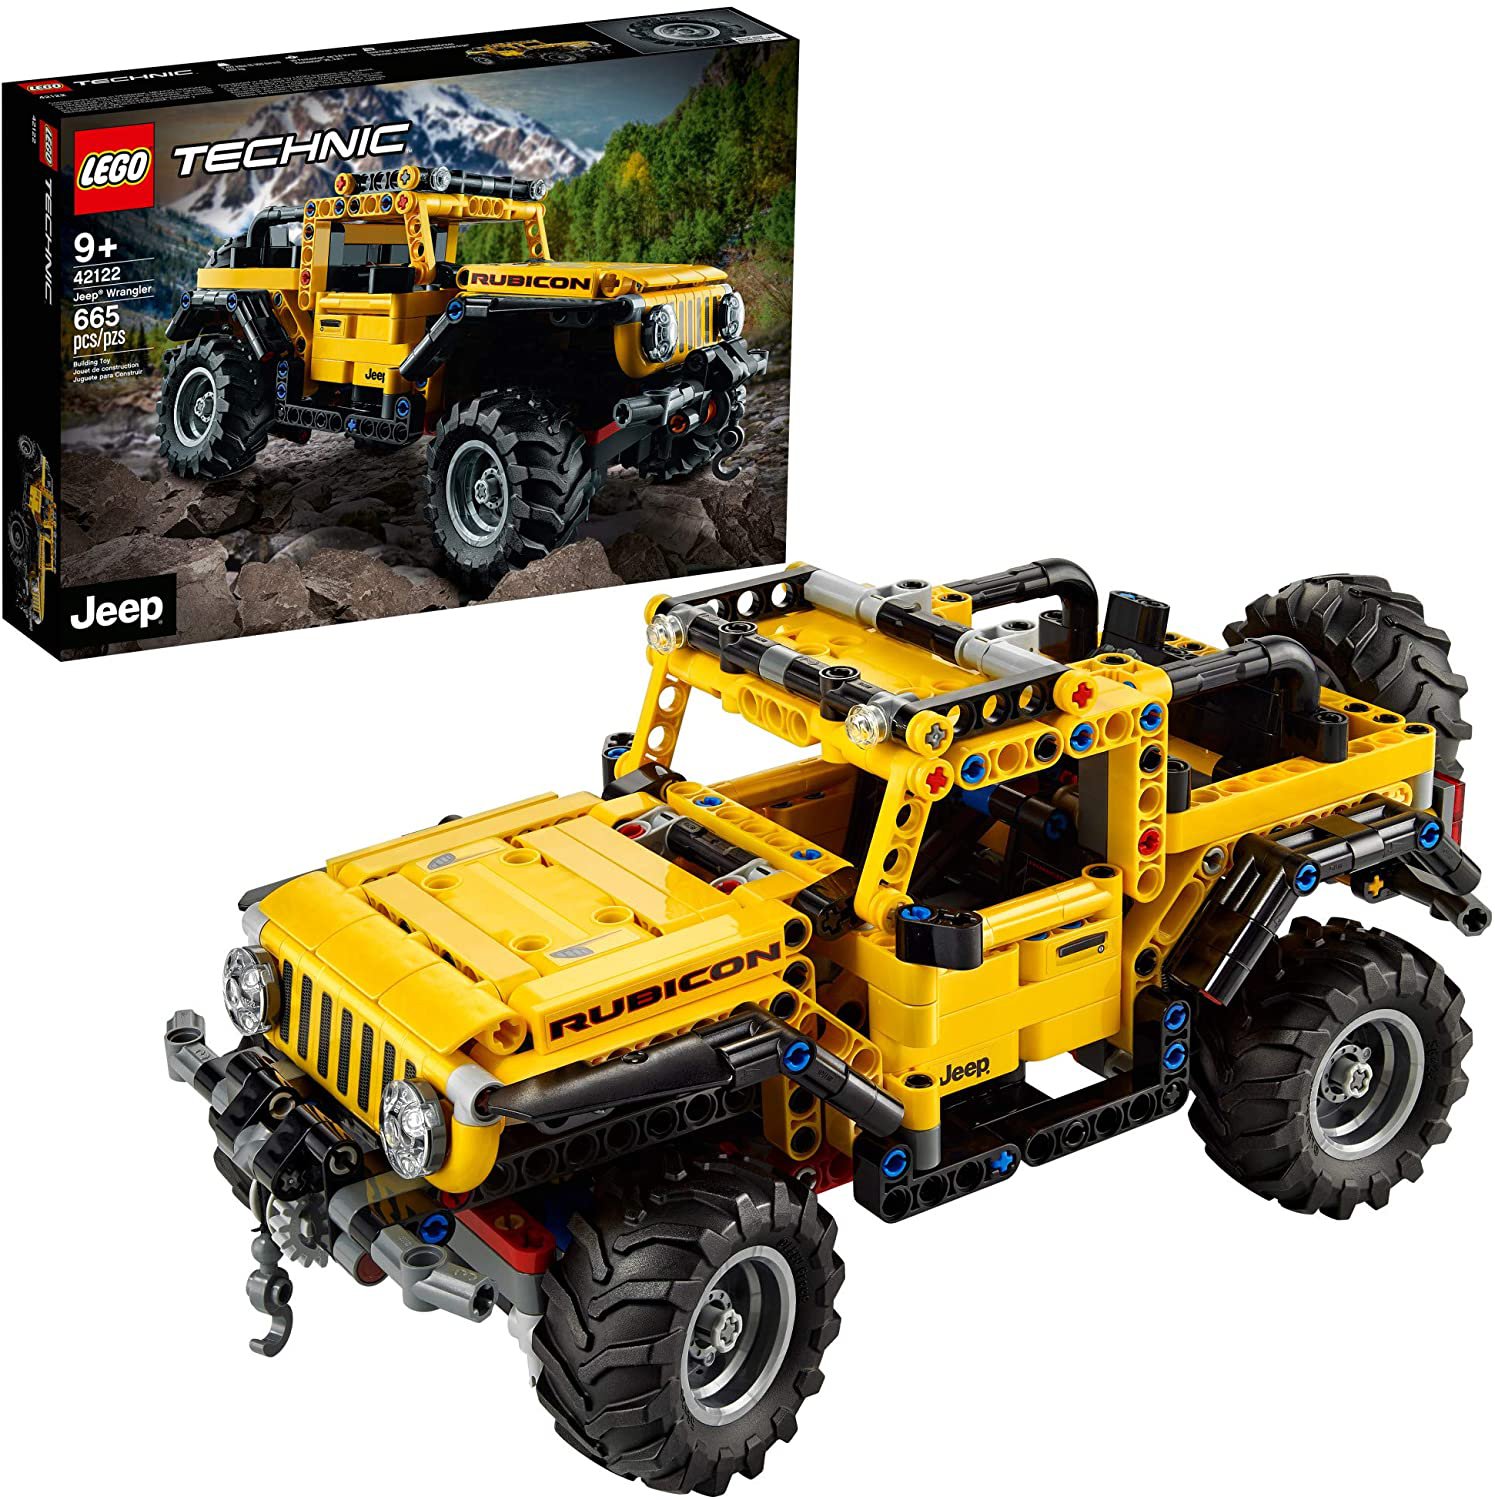 LEGO Technic Jeep Wrangler 42122 Building Toy Set - 665 Pieces